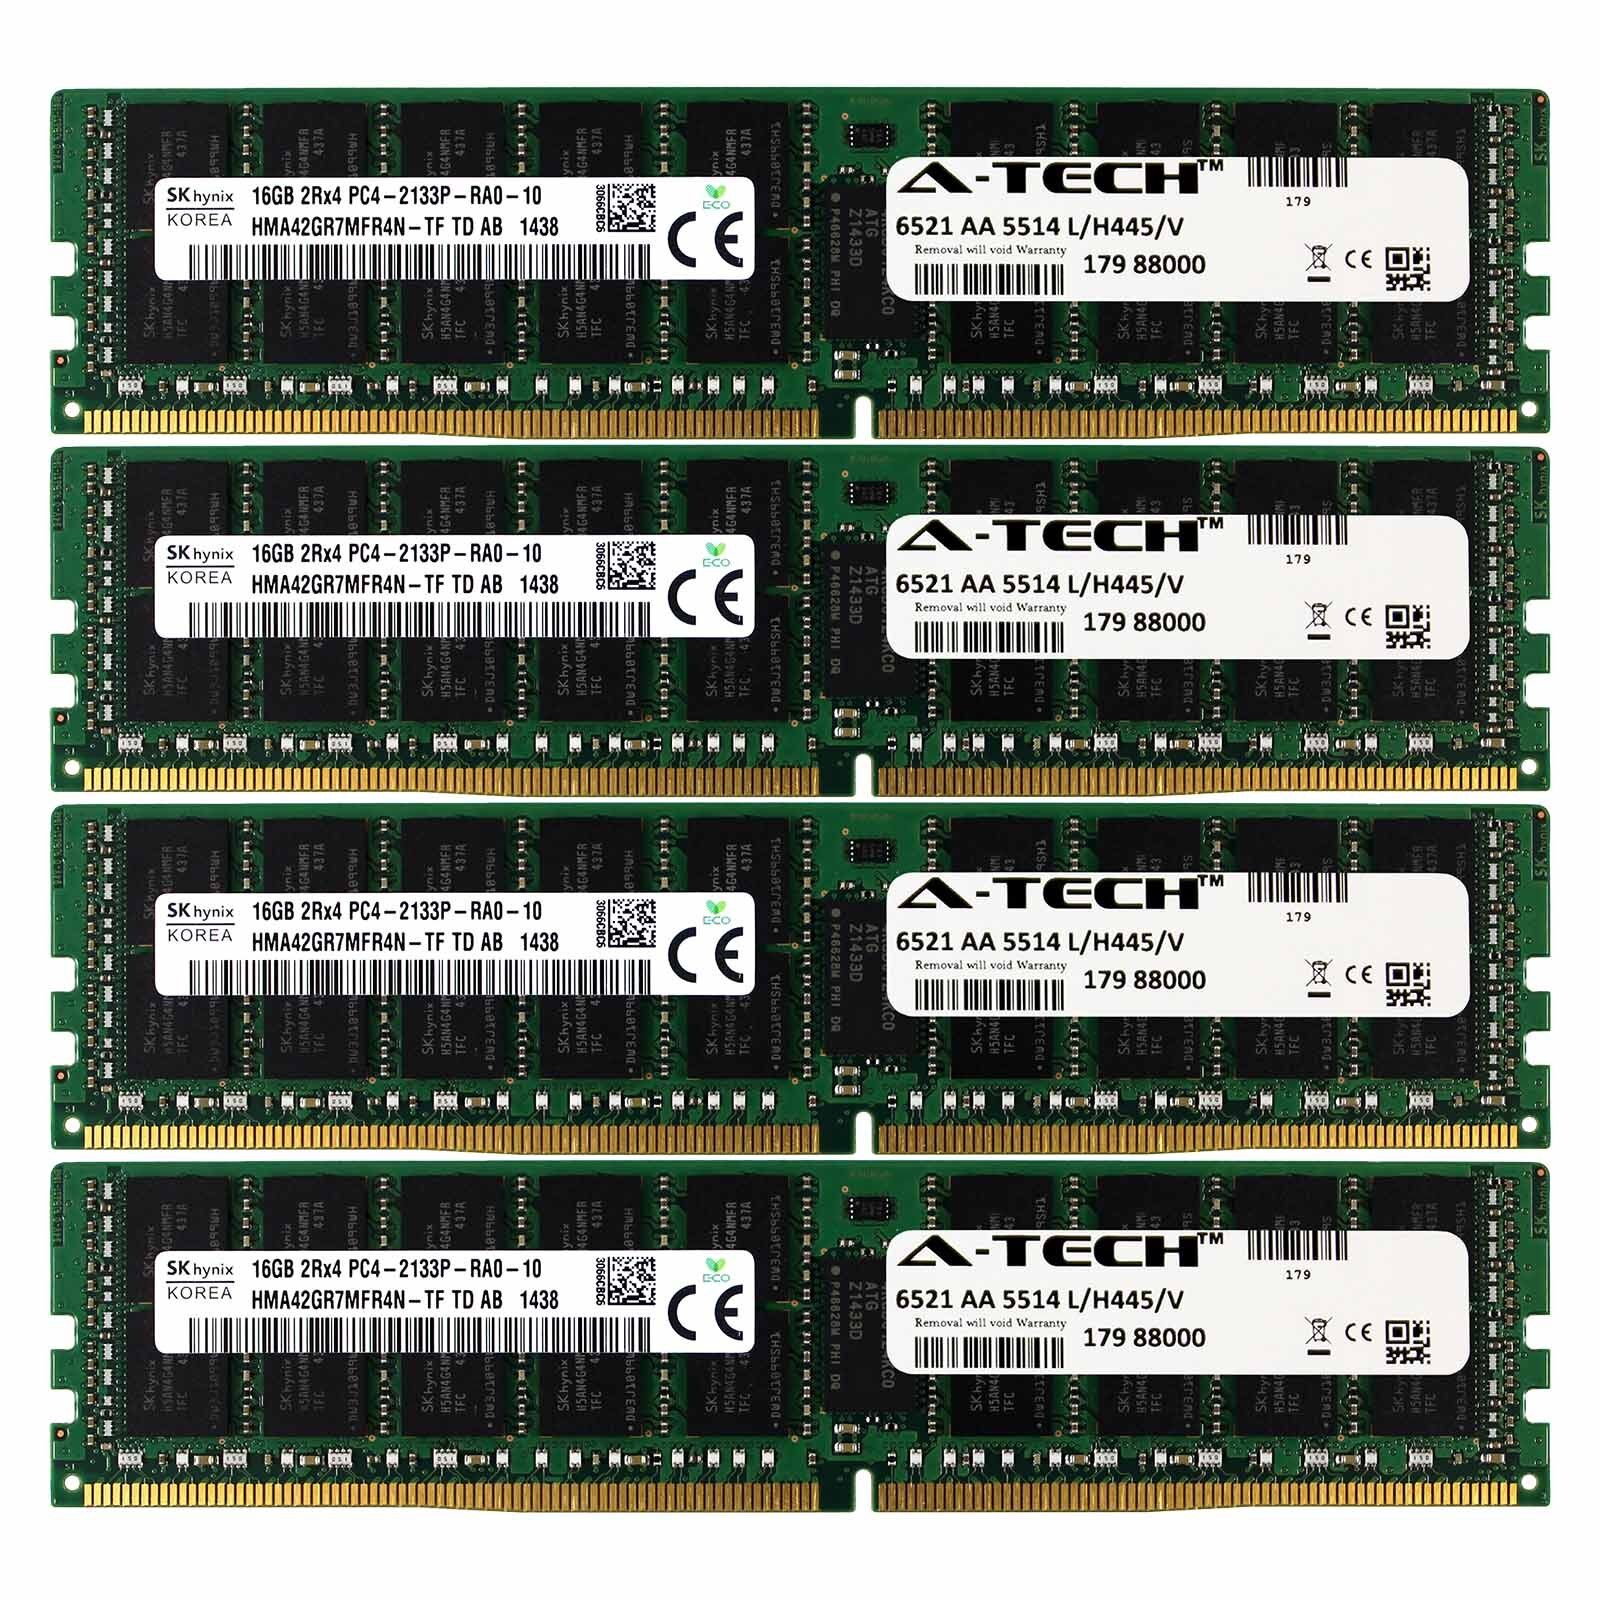 DDR4 2133MHz Hynix 64GB Kit 4x 16GB HP Apollo 4500 4200 726719-B21 Memory RAM